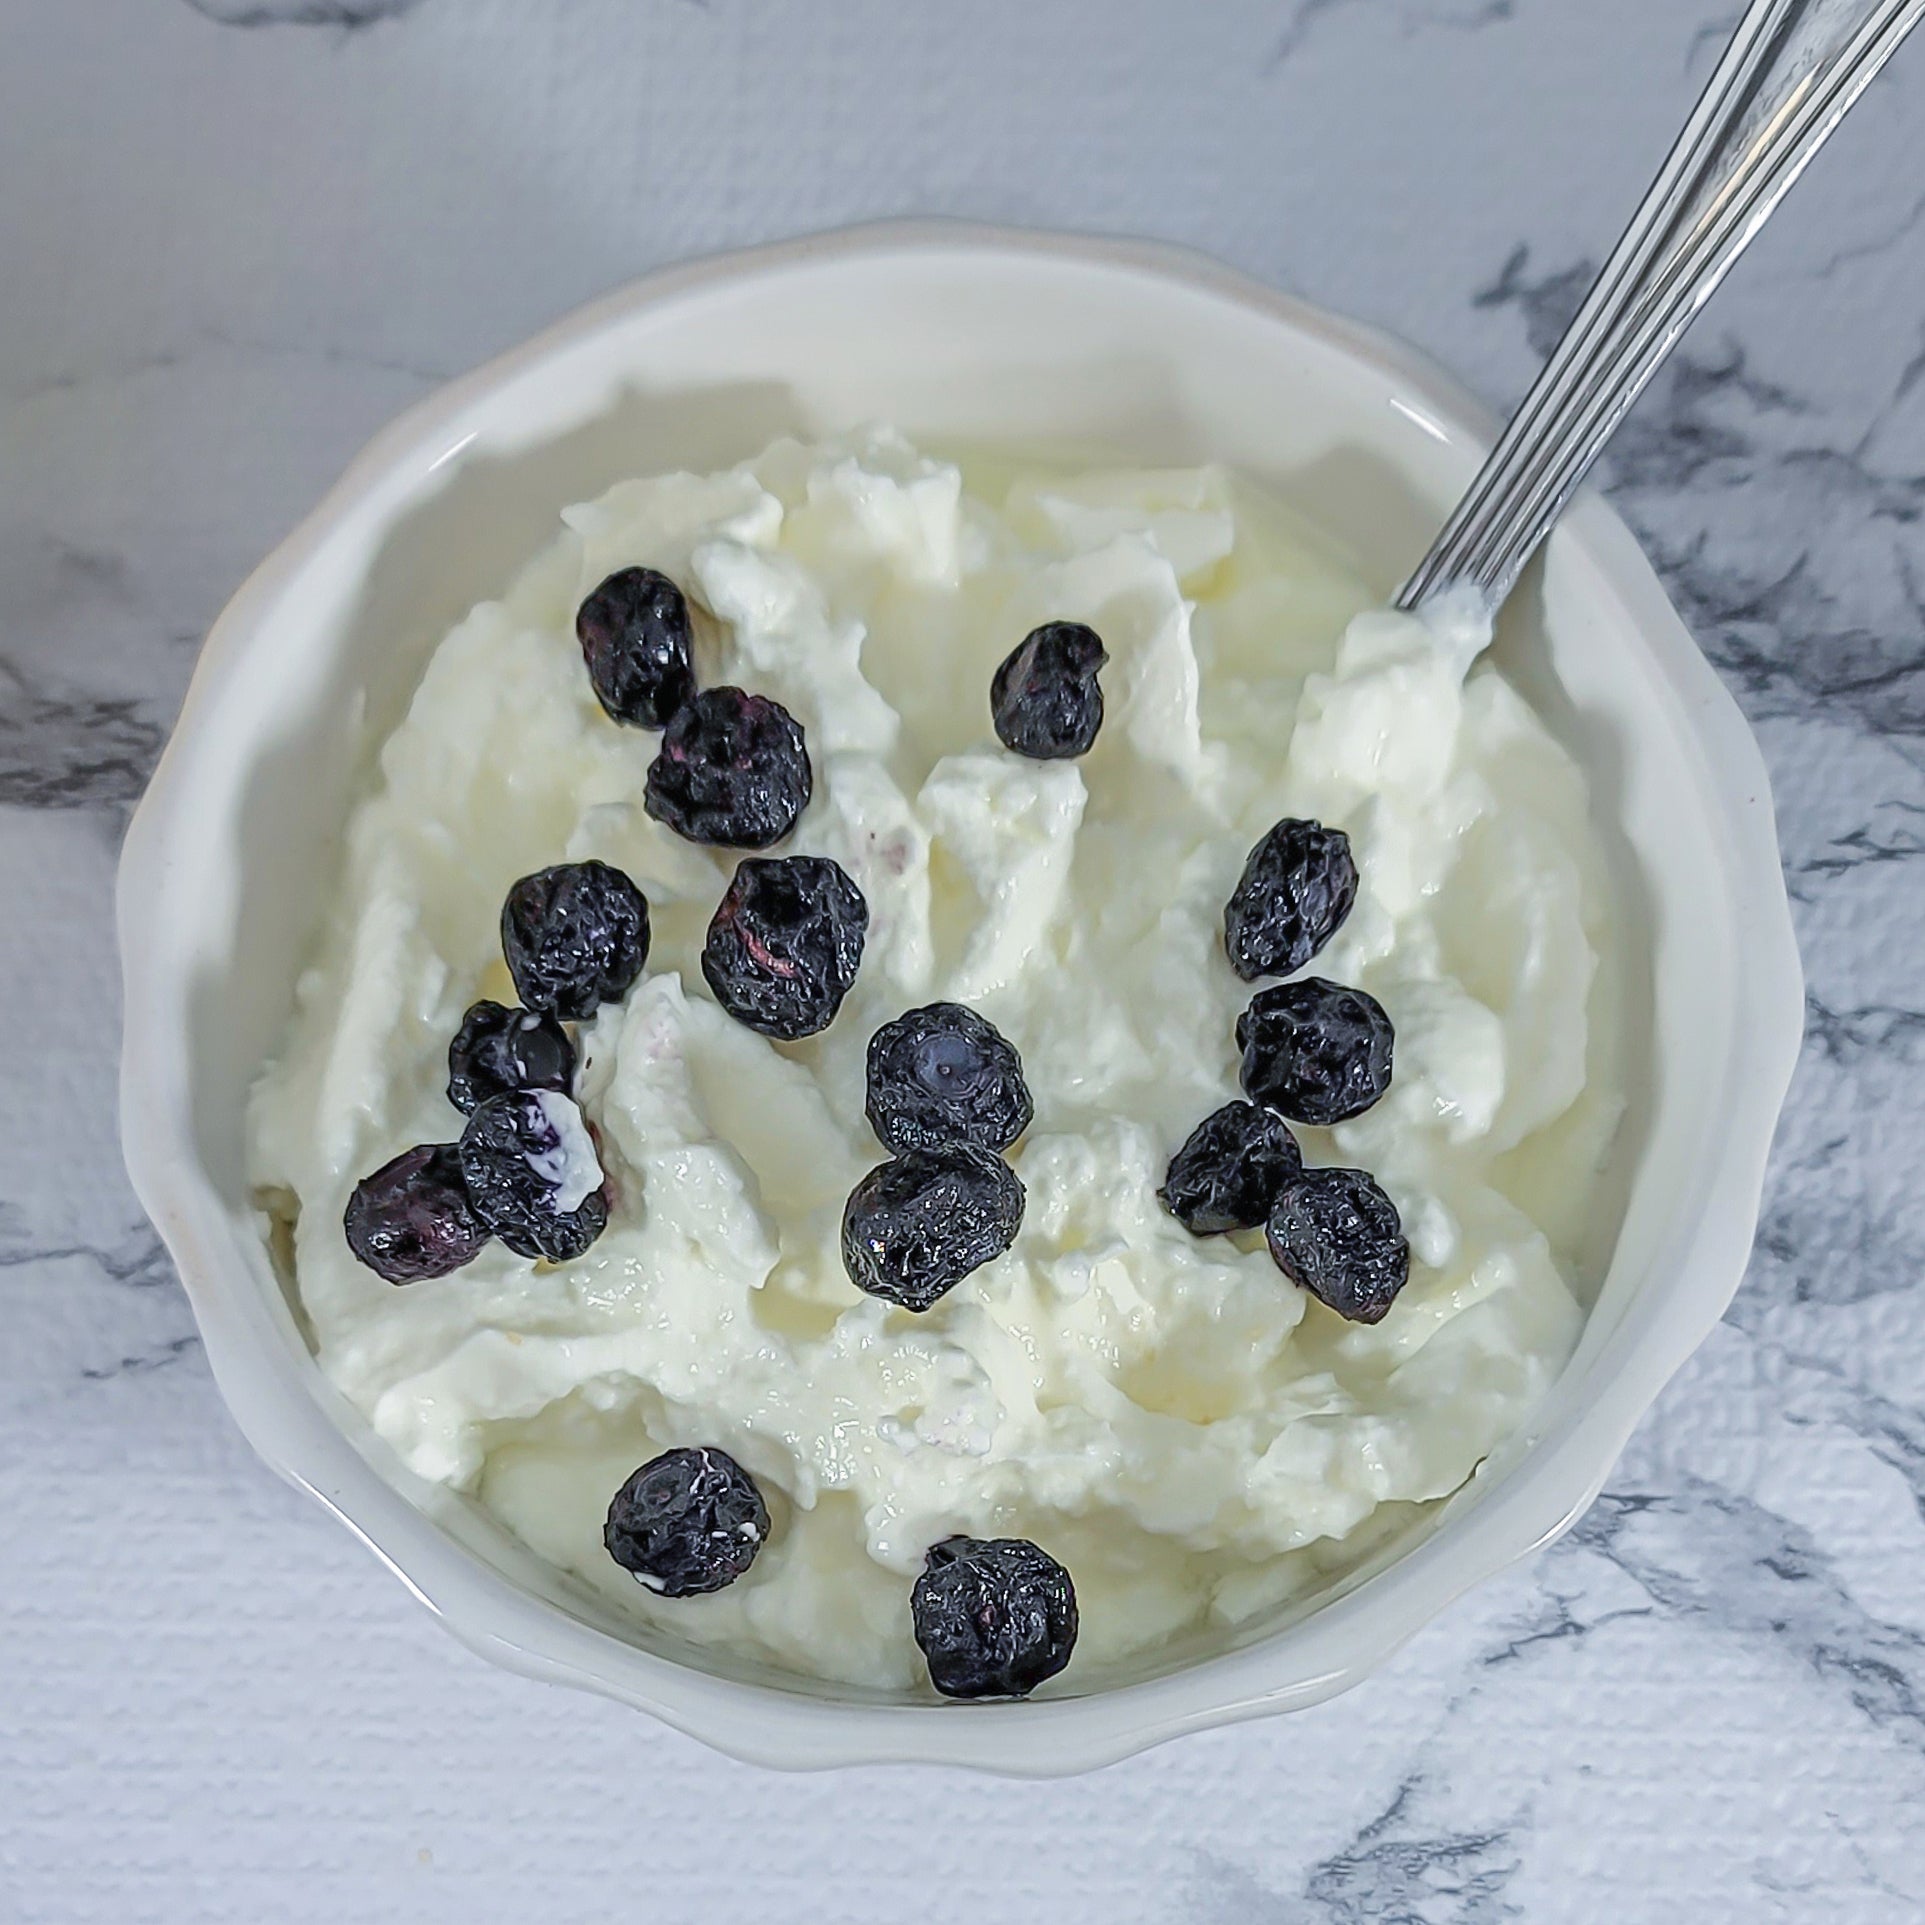 Freeze Dried Blueberries and yogurt mix